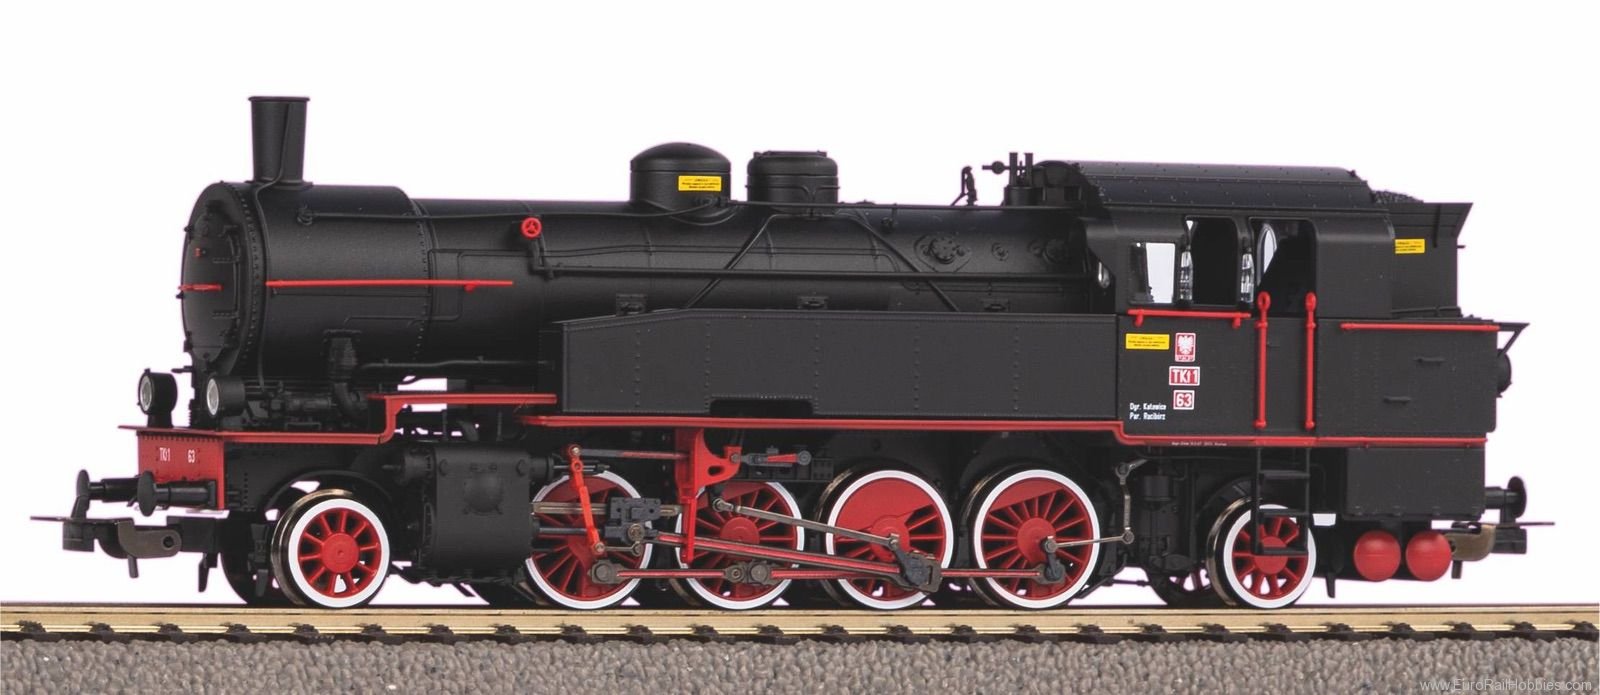 Piko 50662 steam Locomotive Tkt1-63 PKP III (Digital Sou